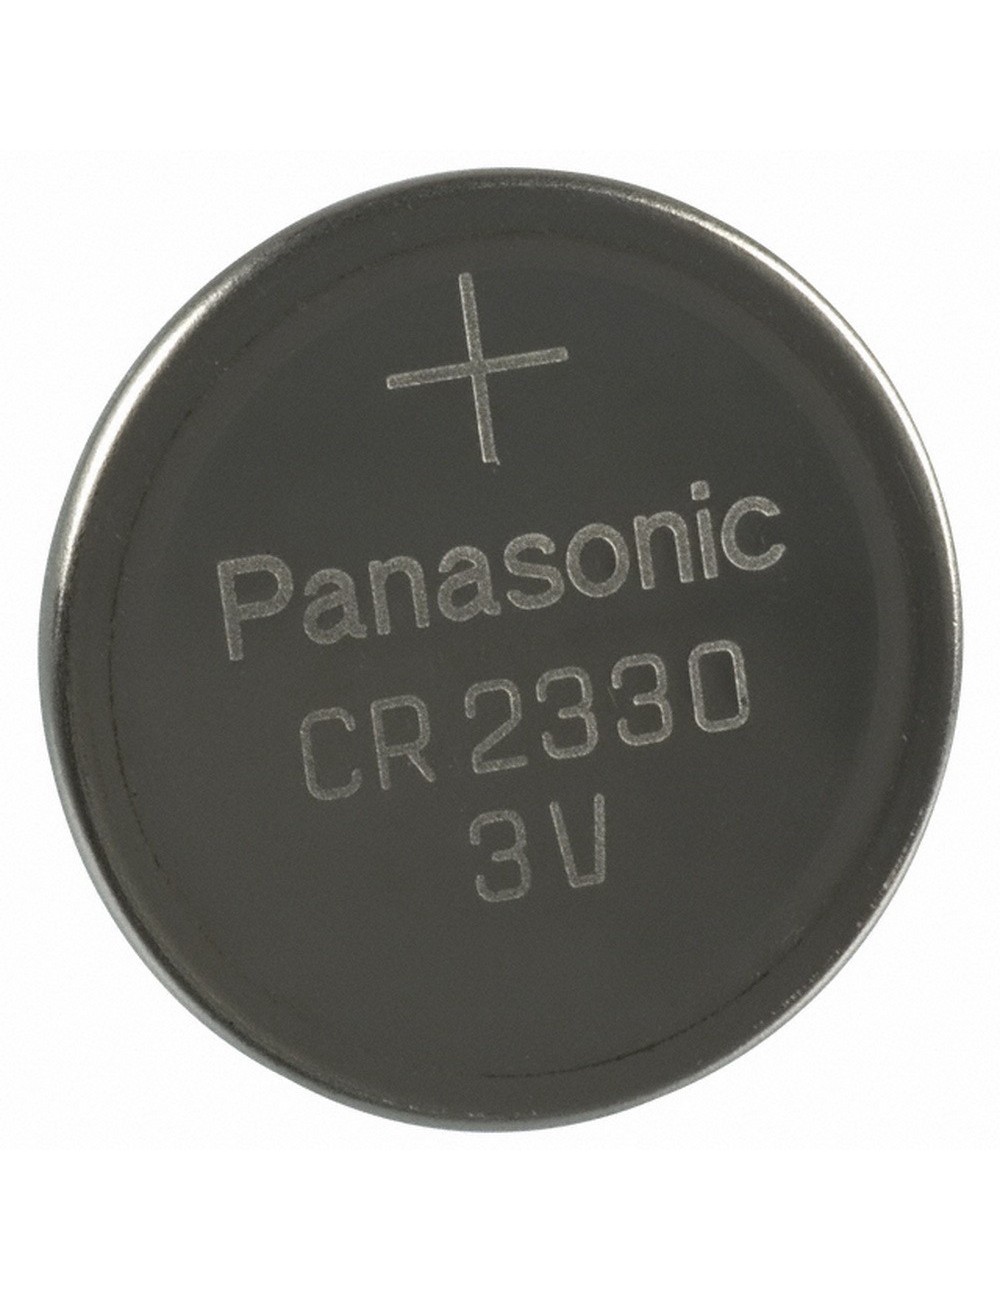 Lithium coin cell CR2330 3V 265mAh (Panasonic)